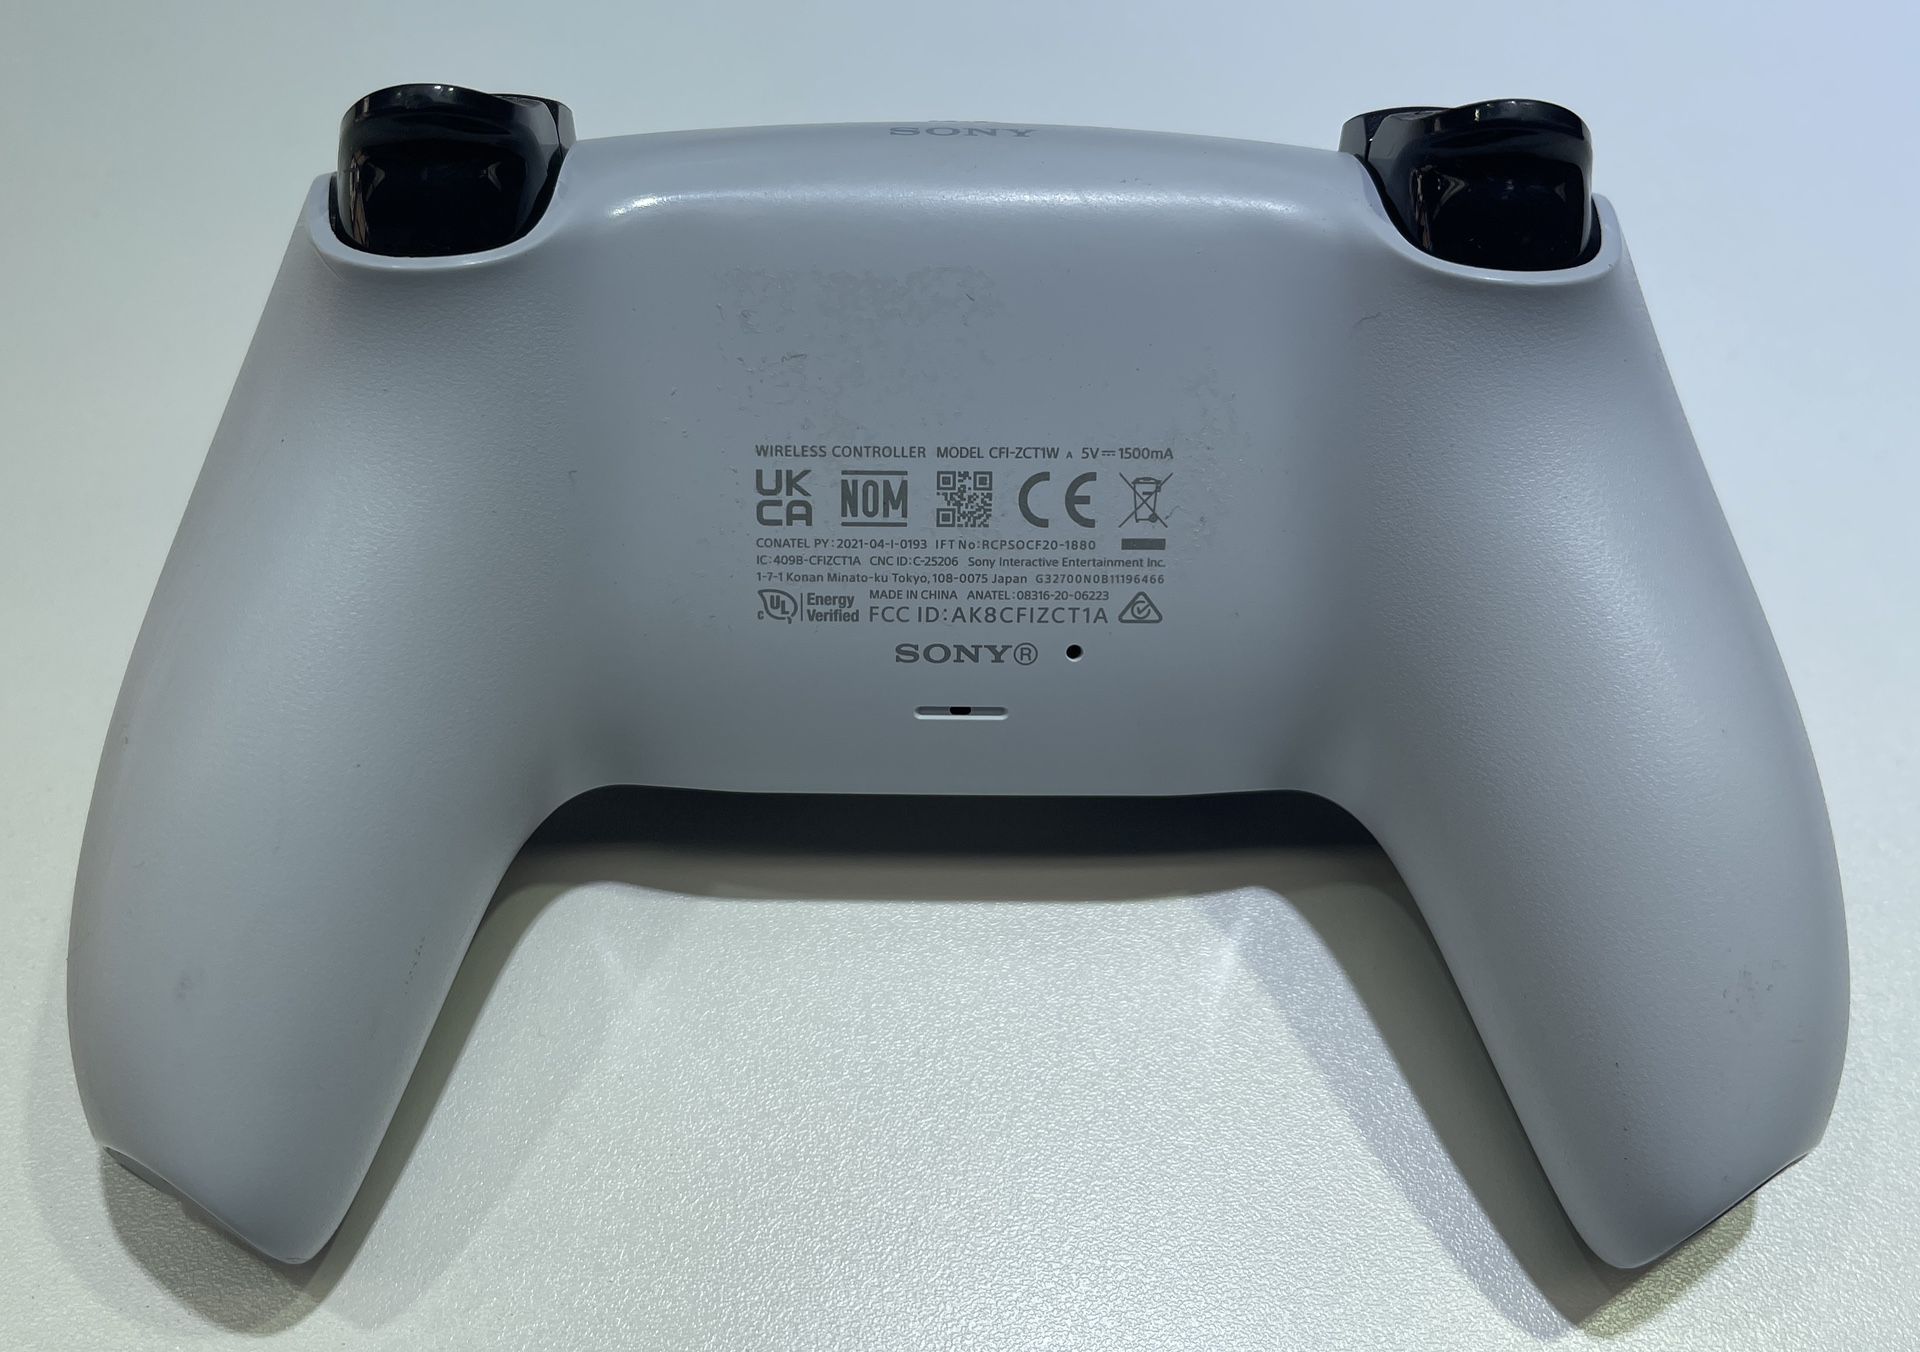 PS5 White Controller 